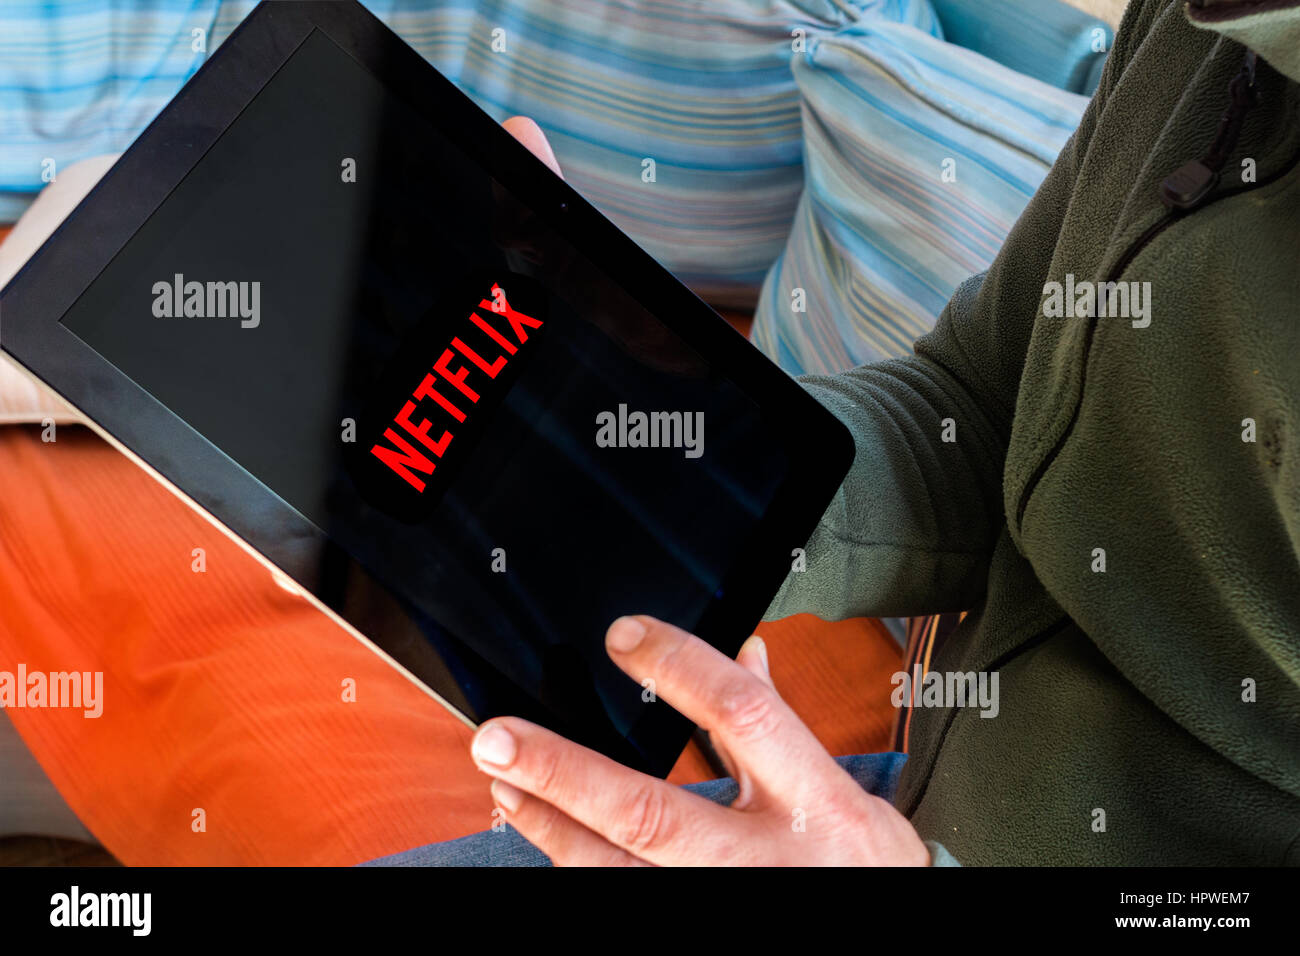 Netflix logo on tablet screen. Stock Photo